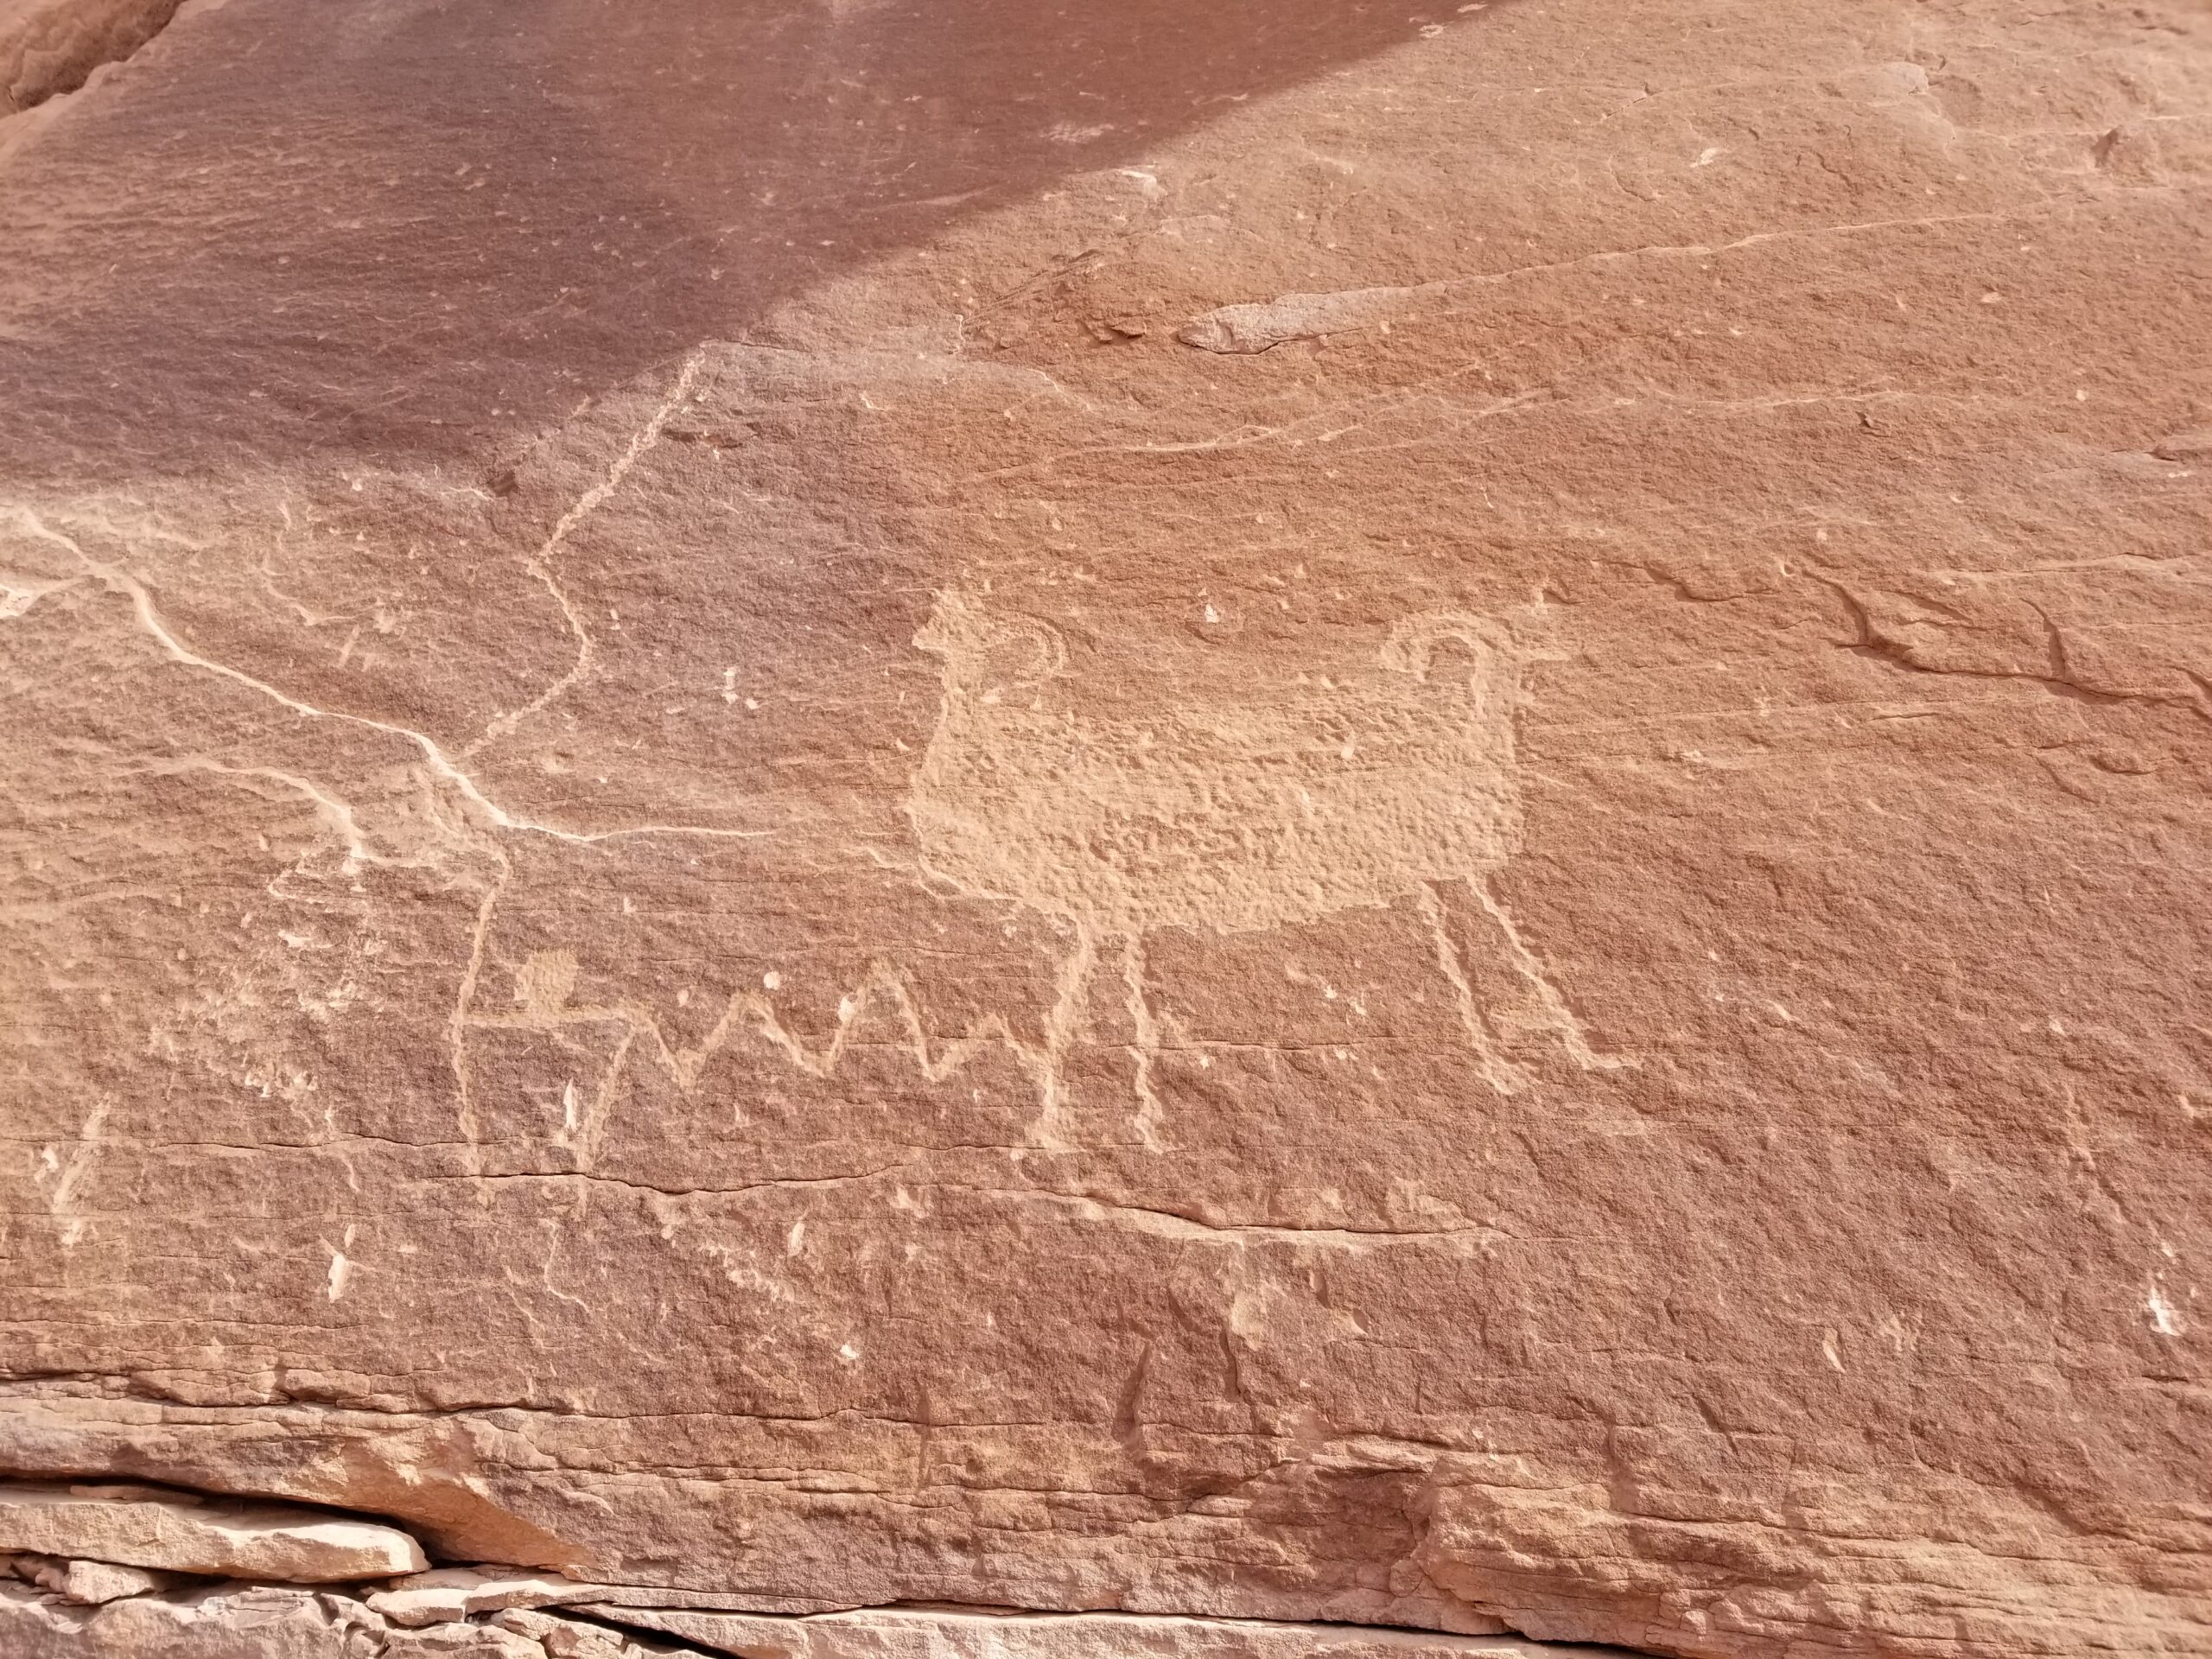 Petroglyph1